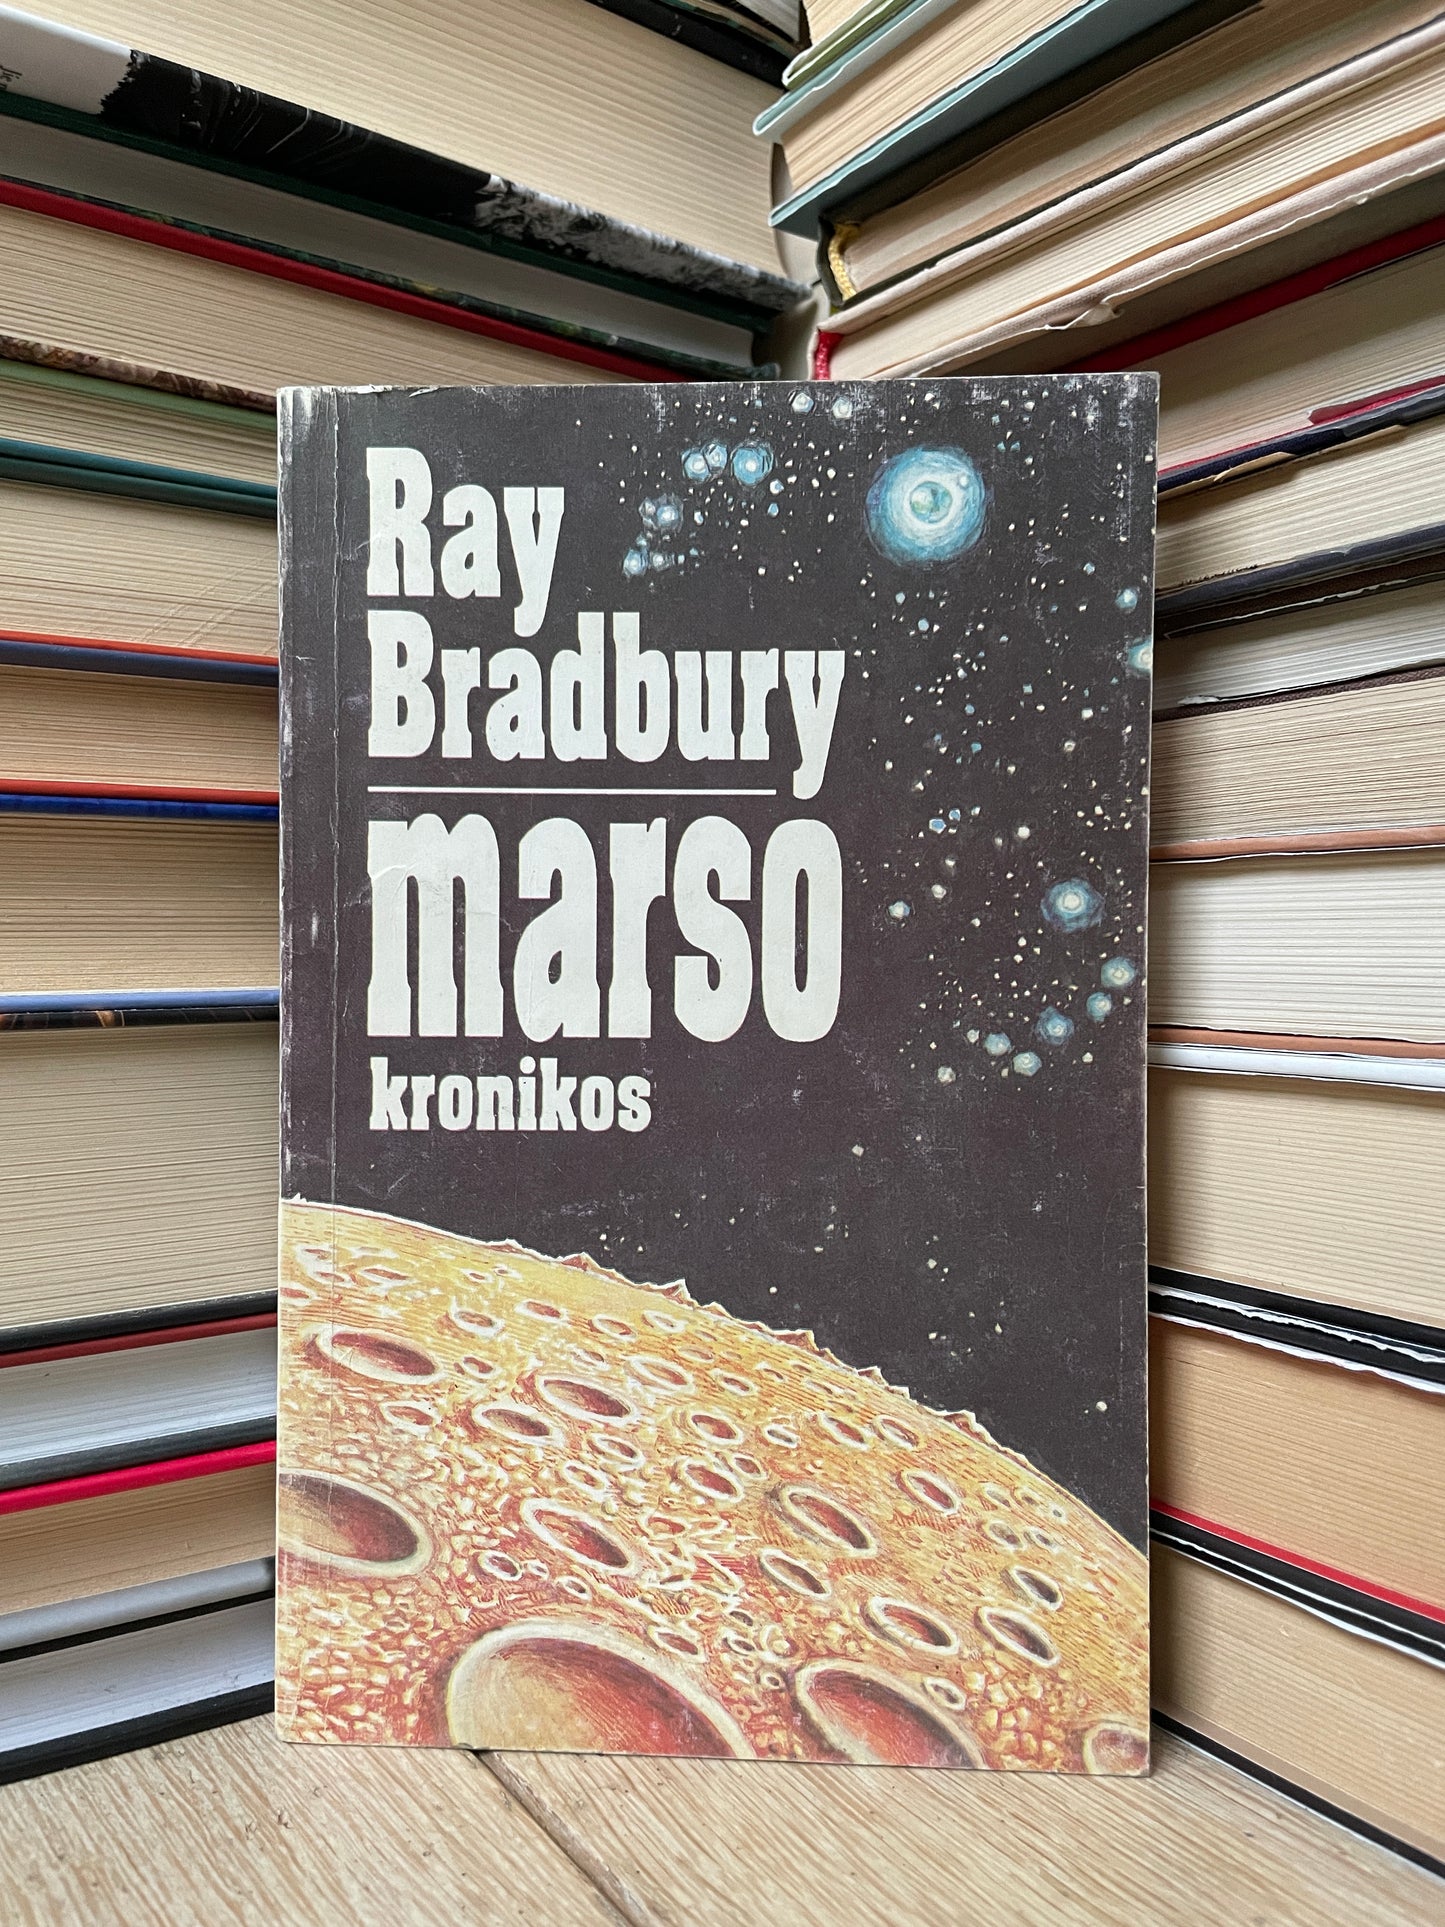 Ray Bradbury - ,Marso kronikos"